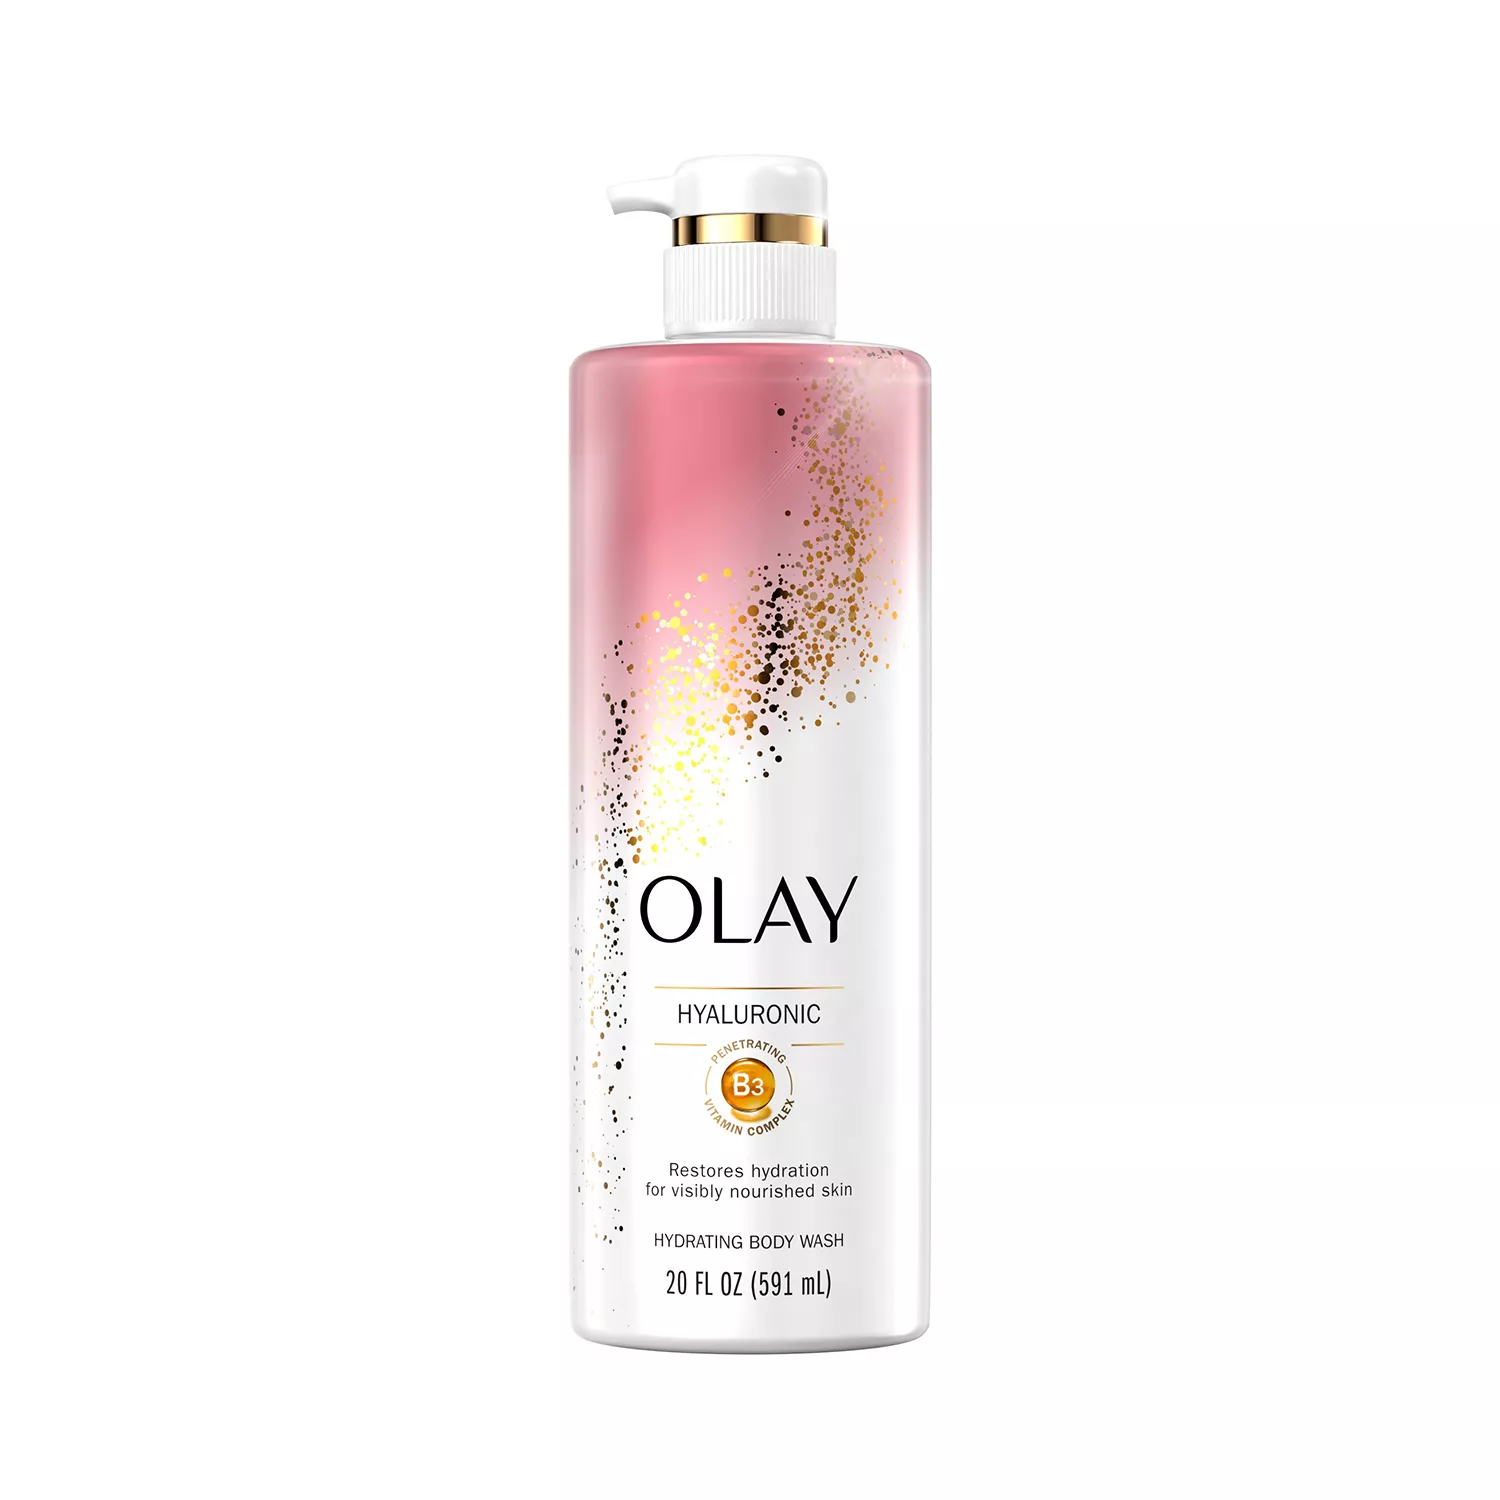 Olay Hyaluronic Hydrating Body Wash